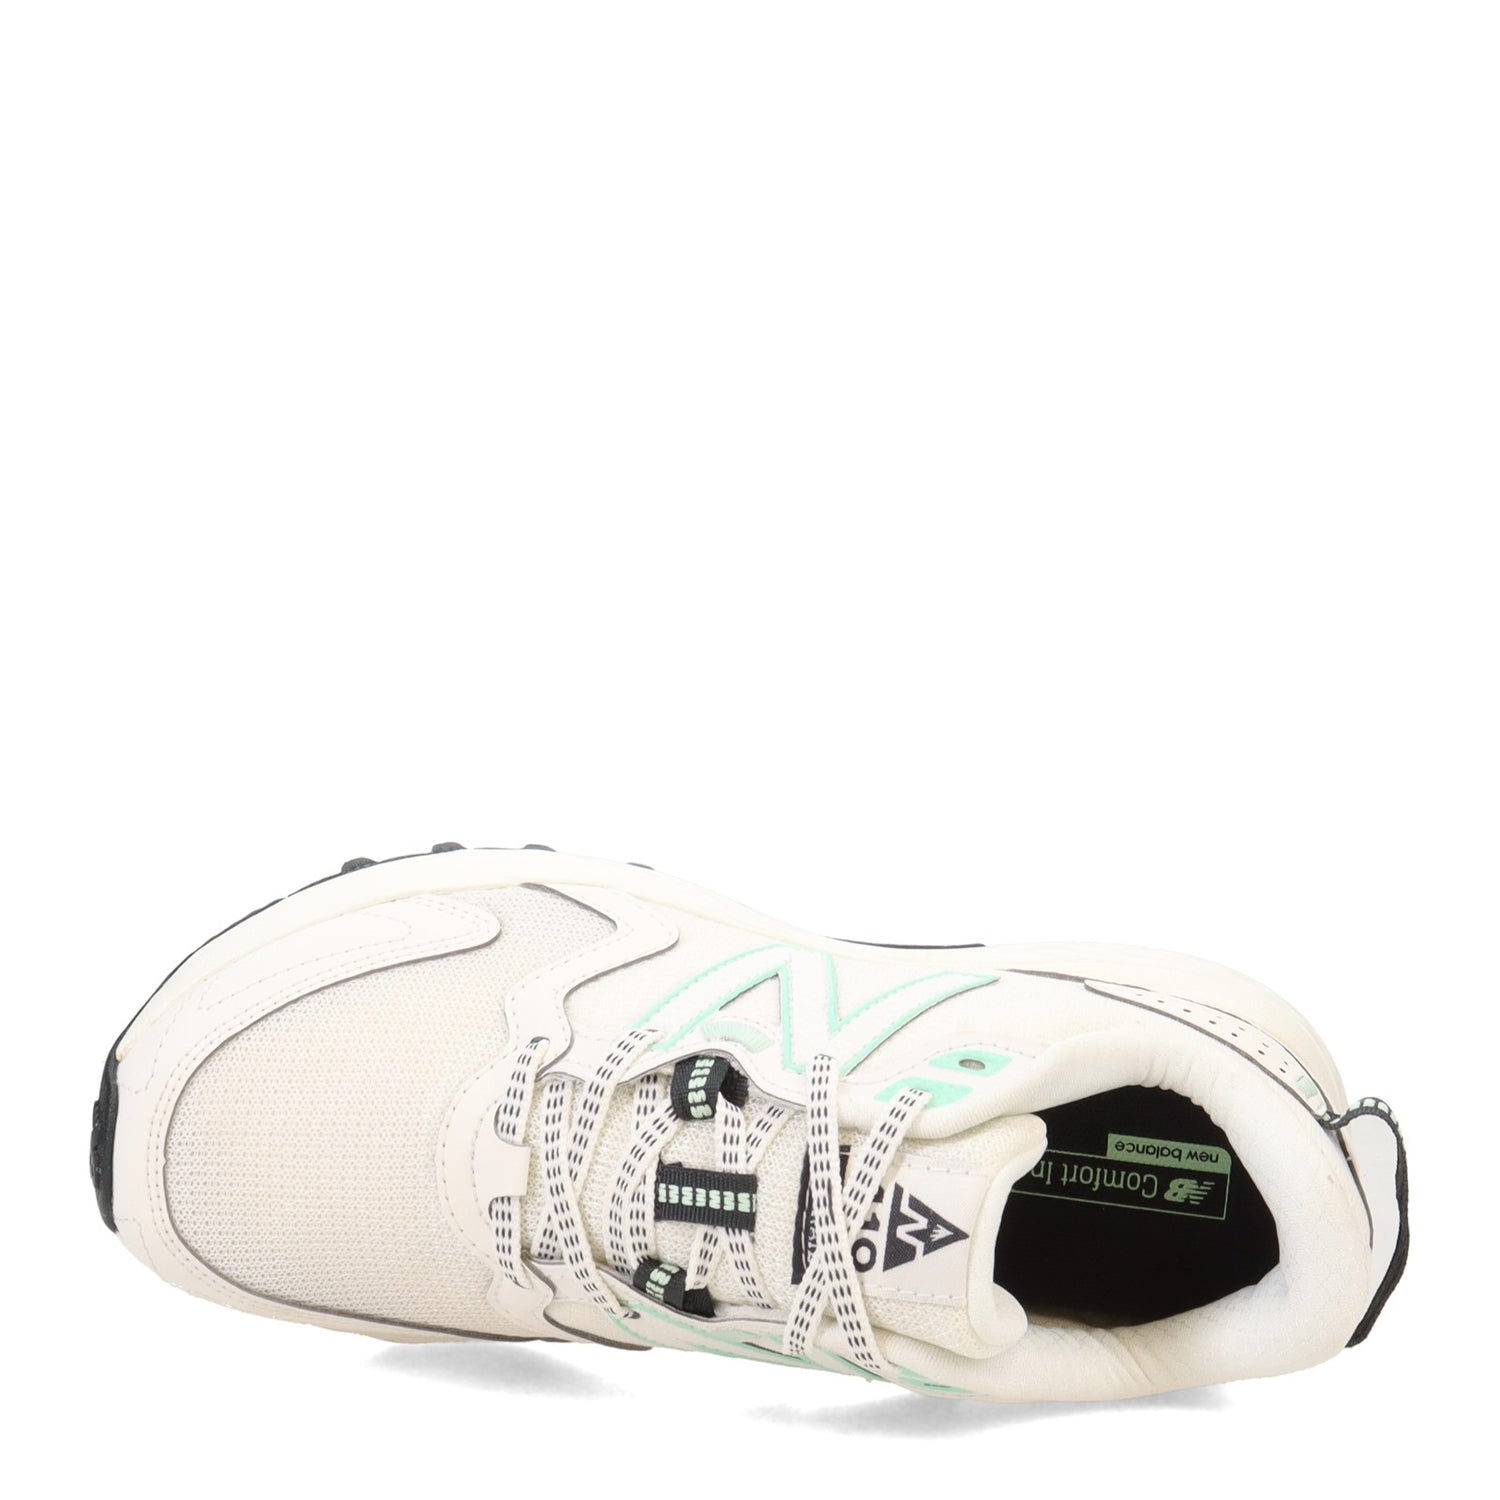 Peltz Shoes  Women's New Balance 410V7 Trail Running Shoe WHITE YELLOW MINT WT410TW7